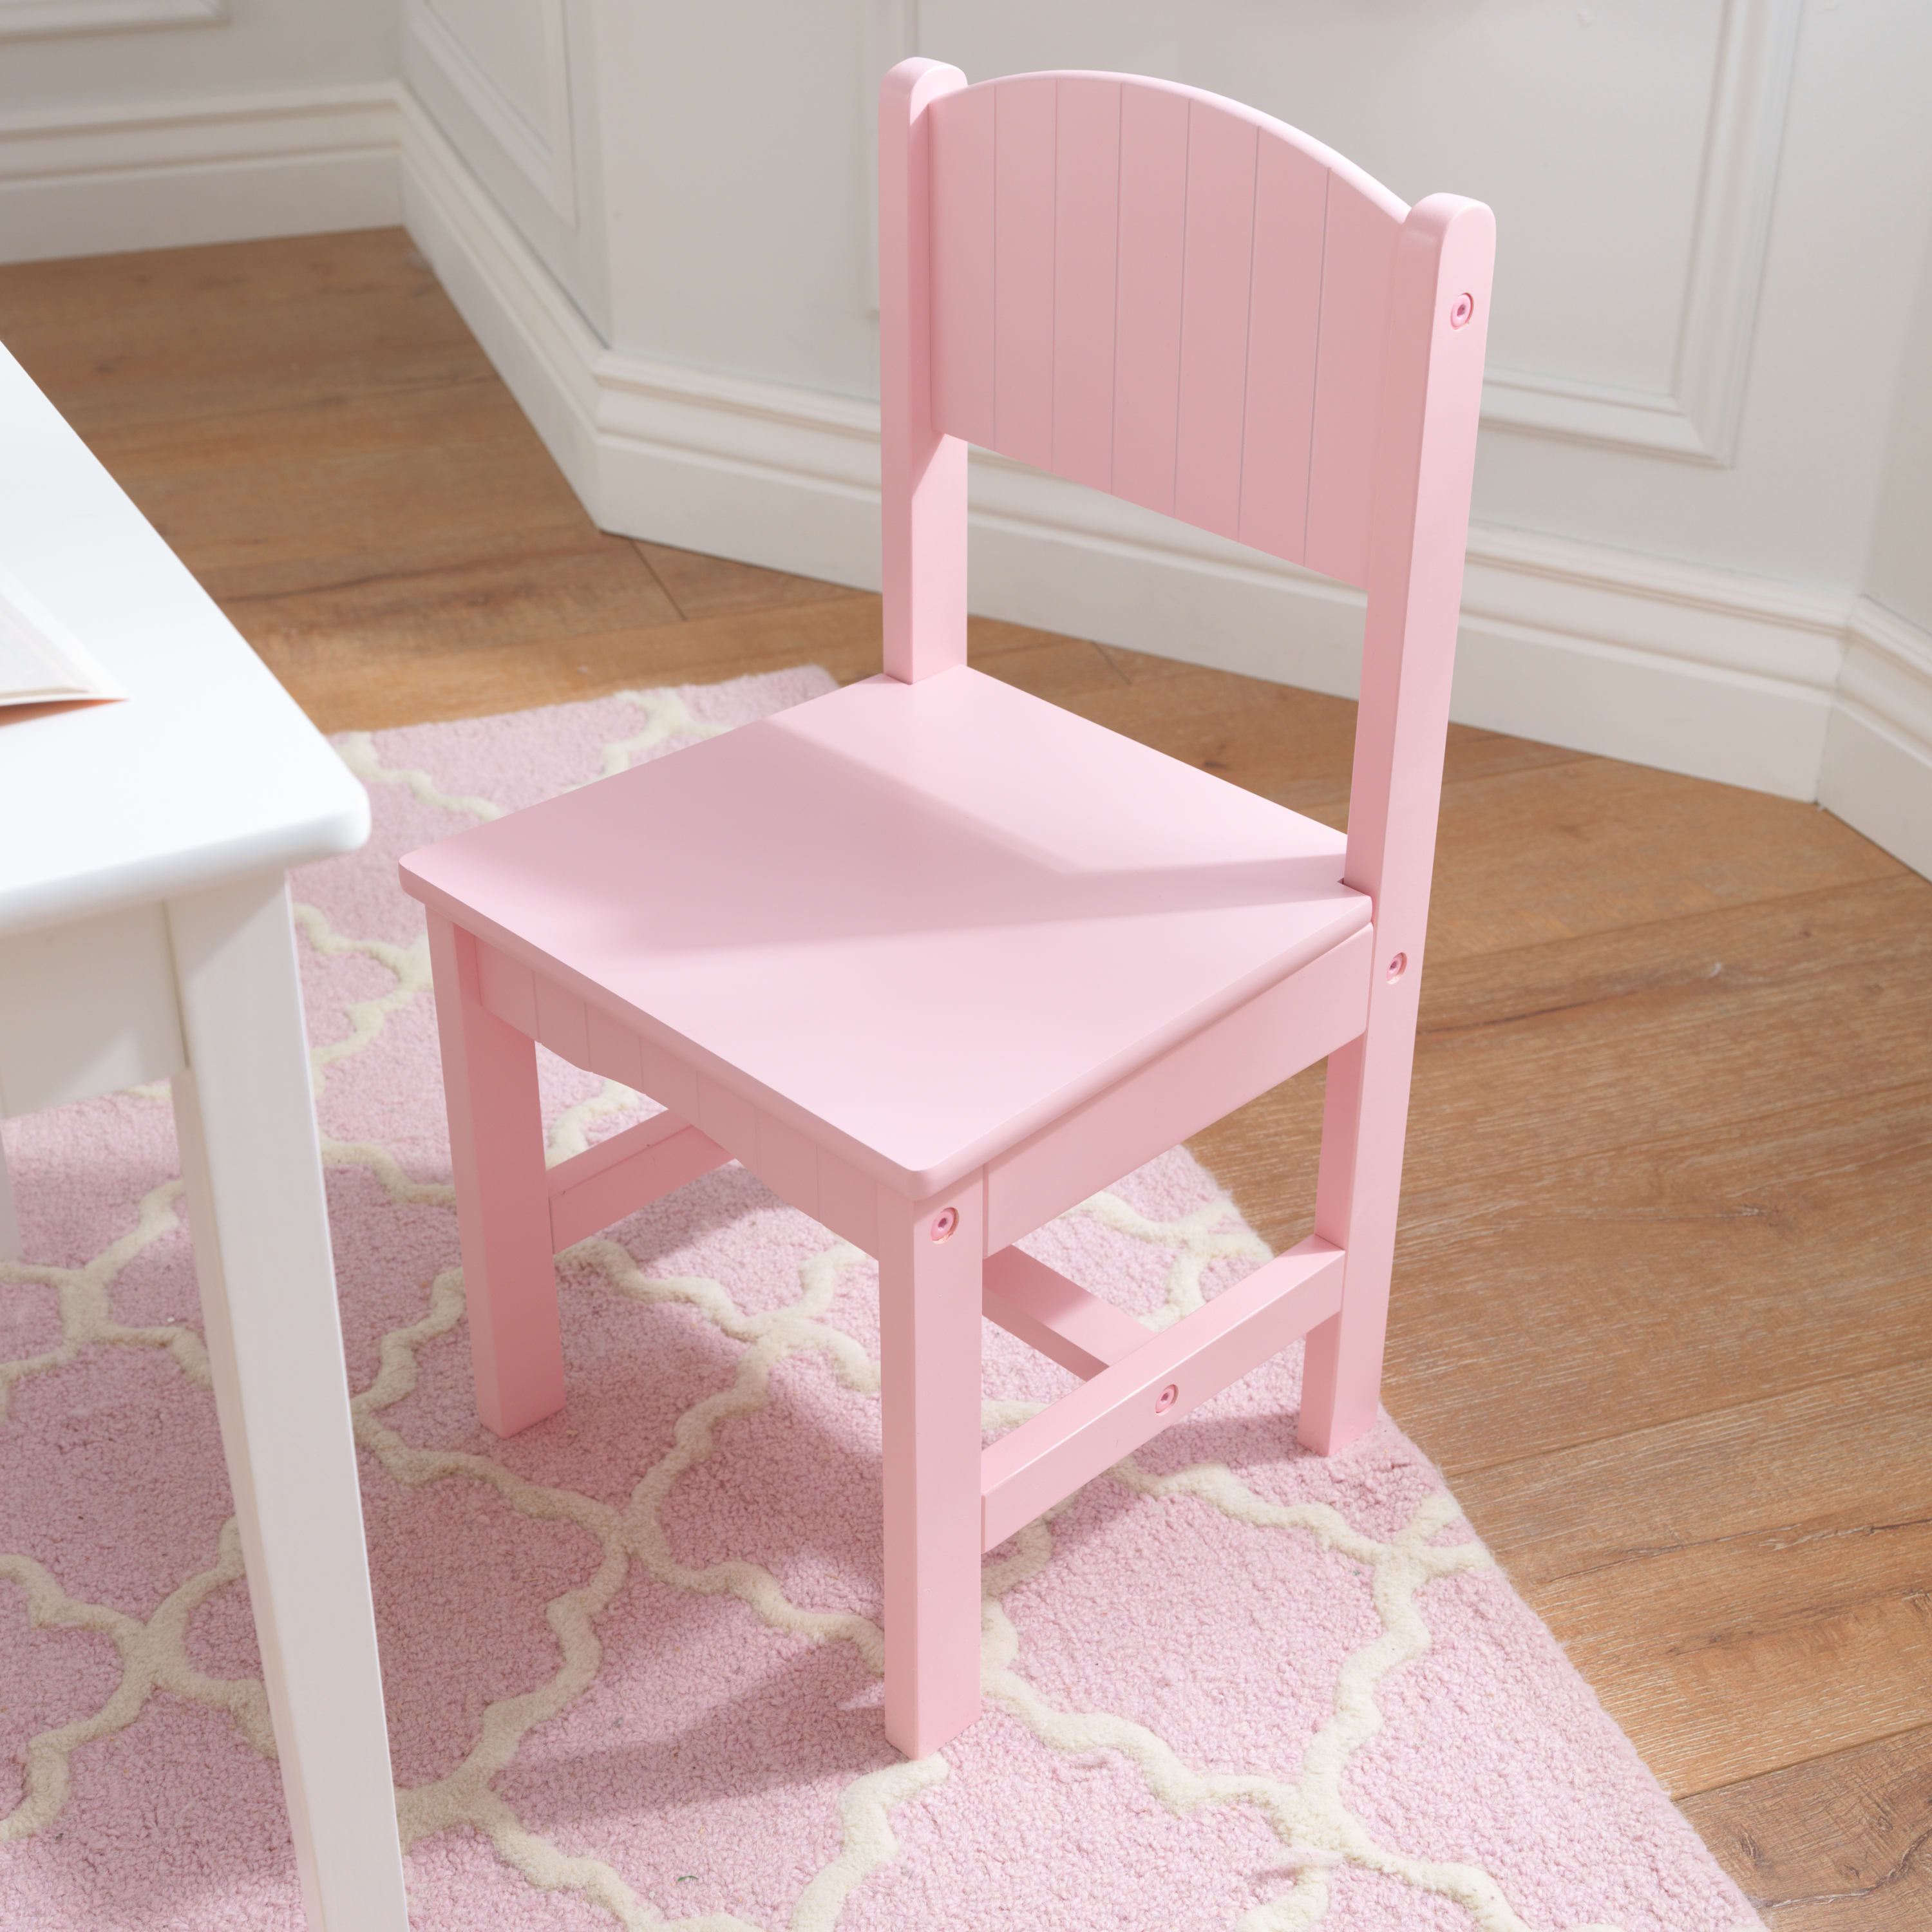 KidKraft Nantucket Children's Wooden Table & 4 Chair Set, Pastel Colors - image 5 of 9